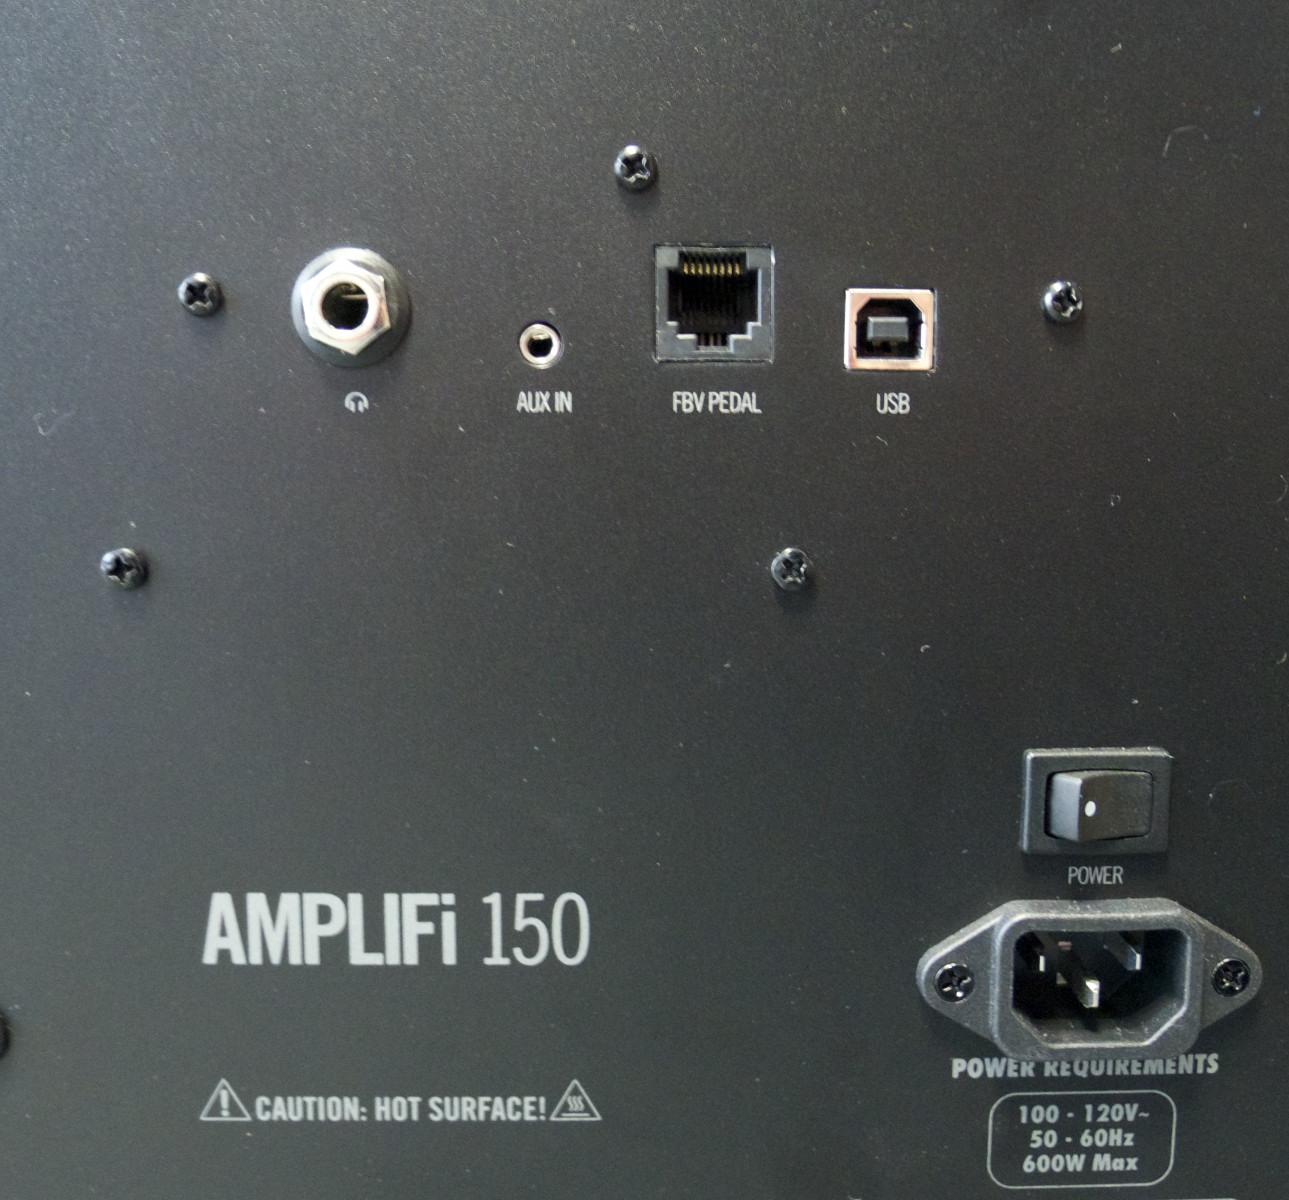 NAMM] New Line 6 AMPLIFi amps - Audiofanzine